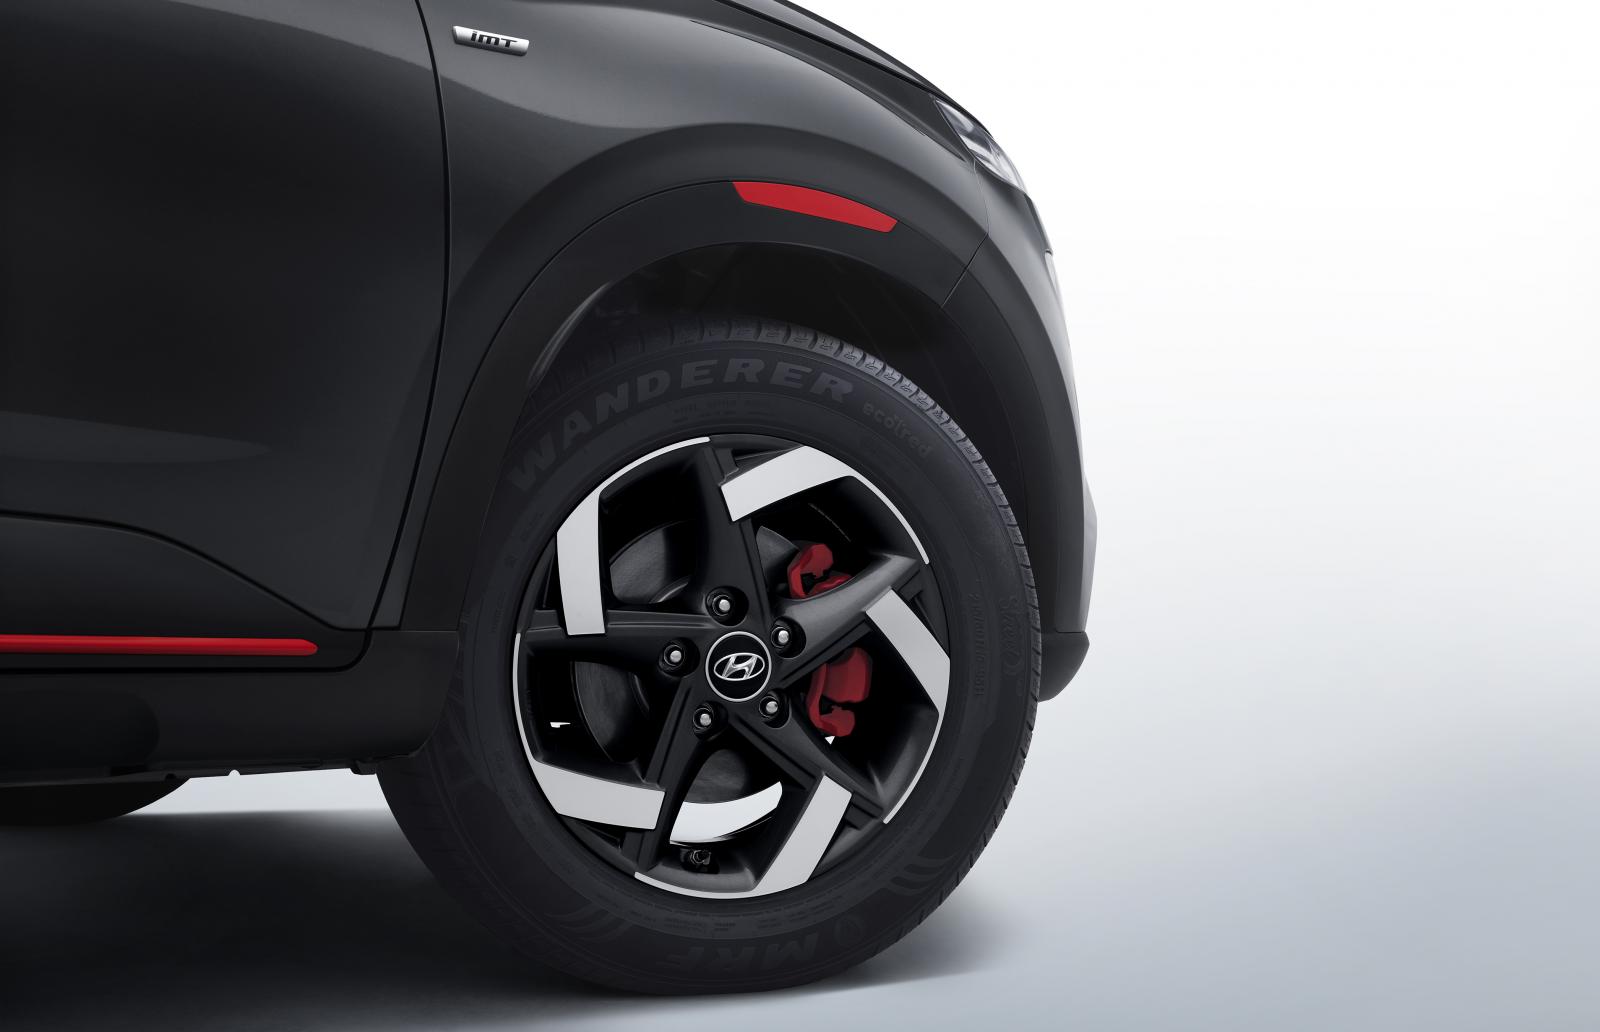 2020 - [Hyundai] Venue SUV compact  - Page 3 Hyundai-venue-imt-alloy-wheels-f63d